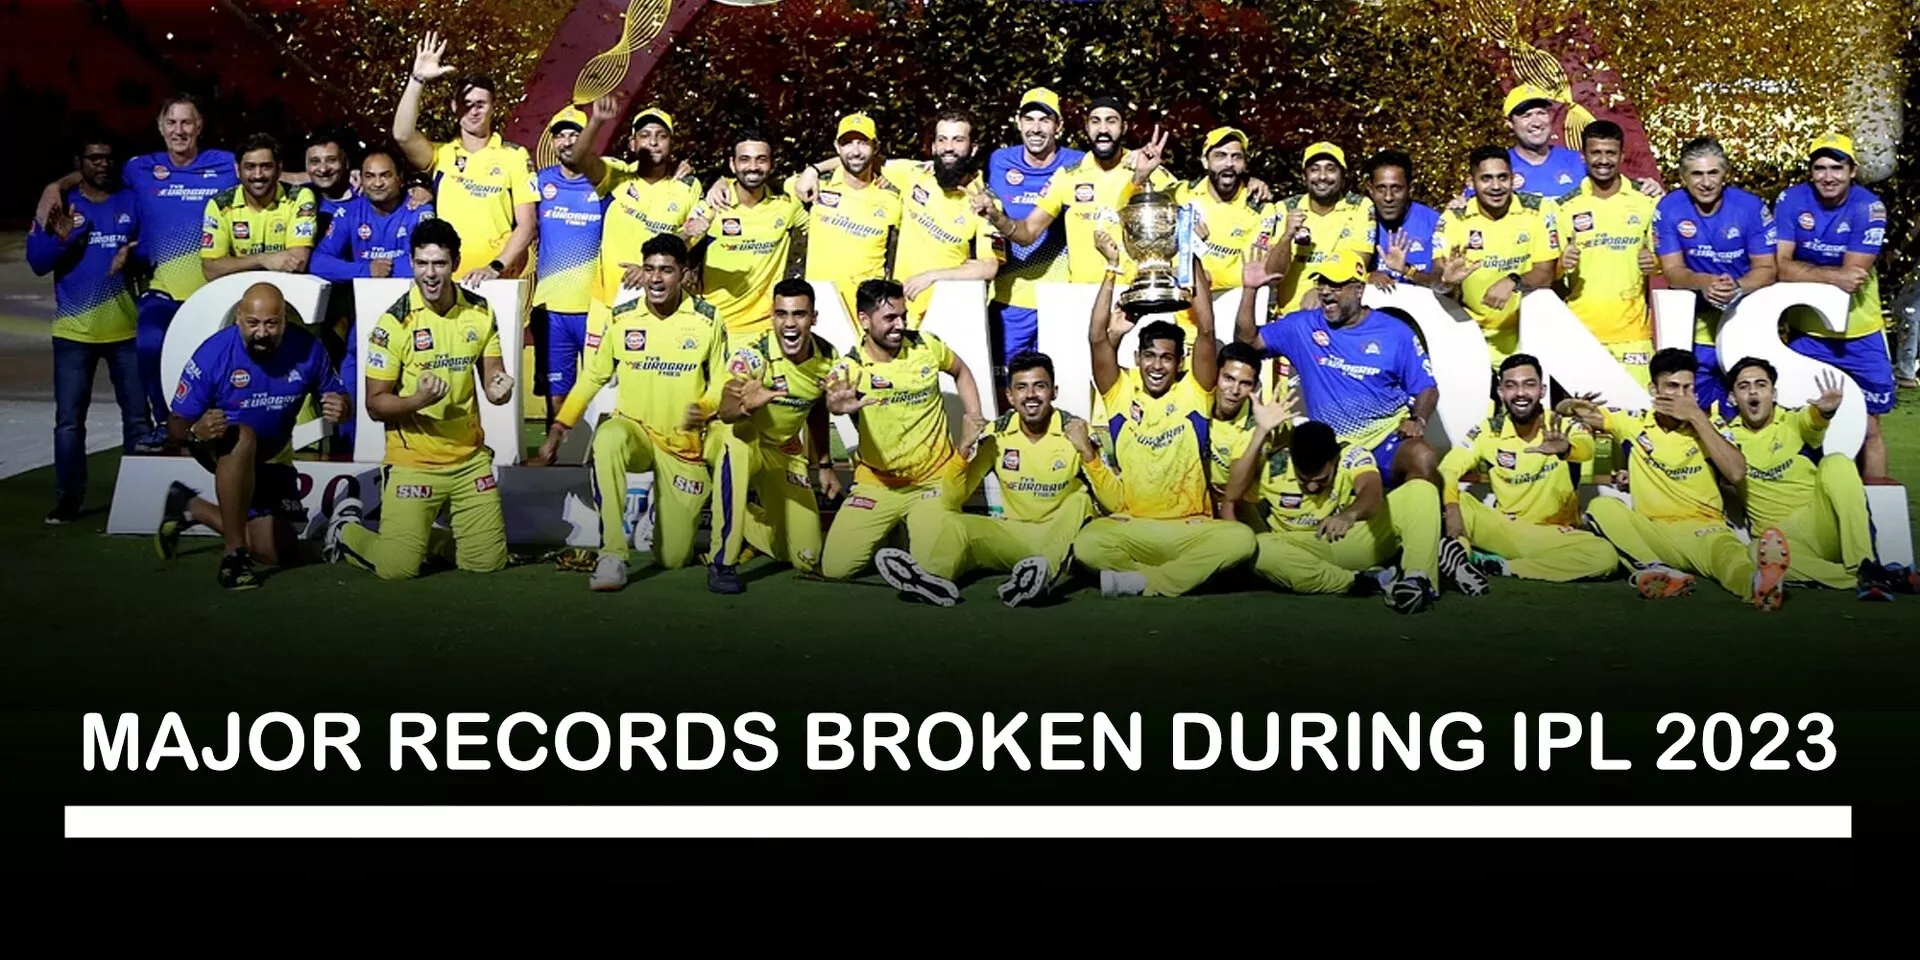 List of major records broken during IPL 2023